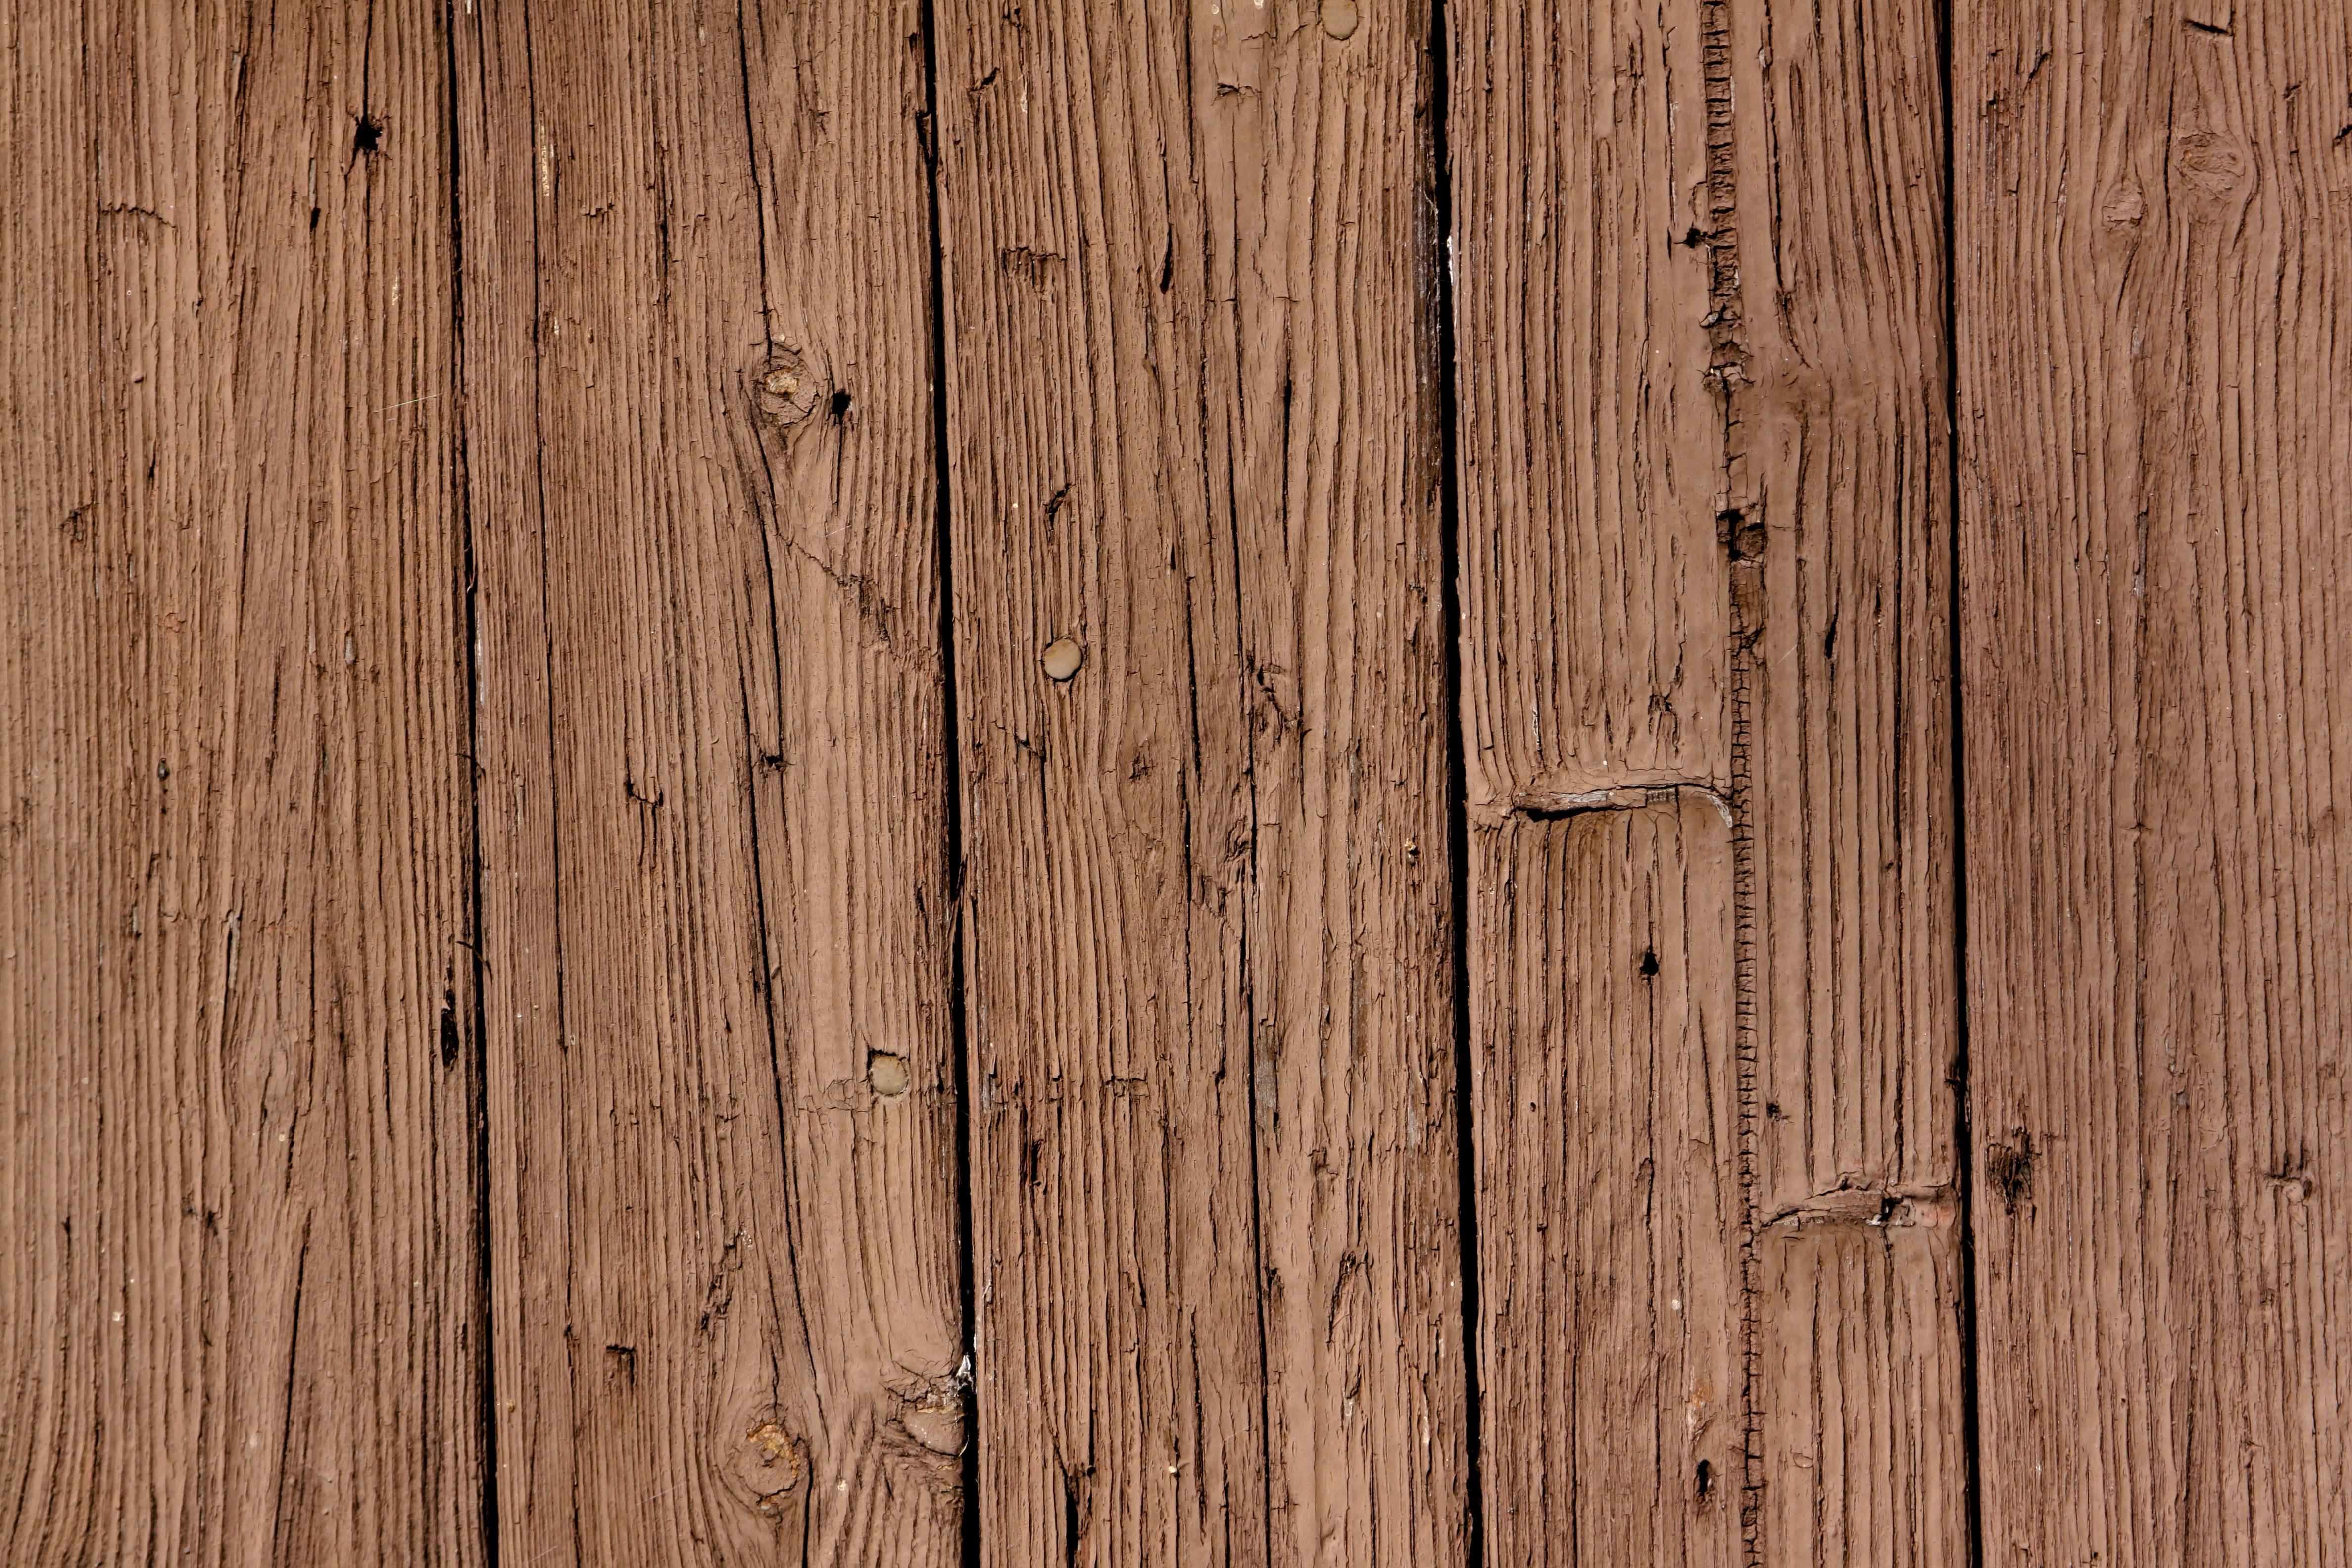 Wood. Браун Вуд (Brown Wood). Деревянная текстура. Деревянный стол текстура. Текстура дерева доски.